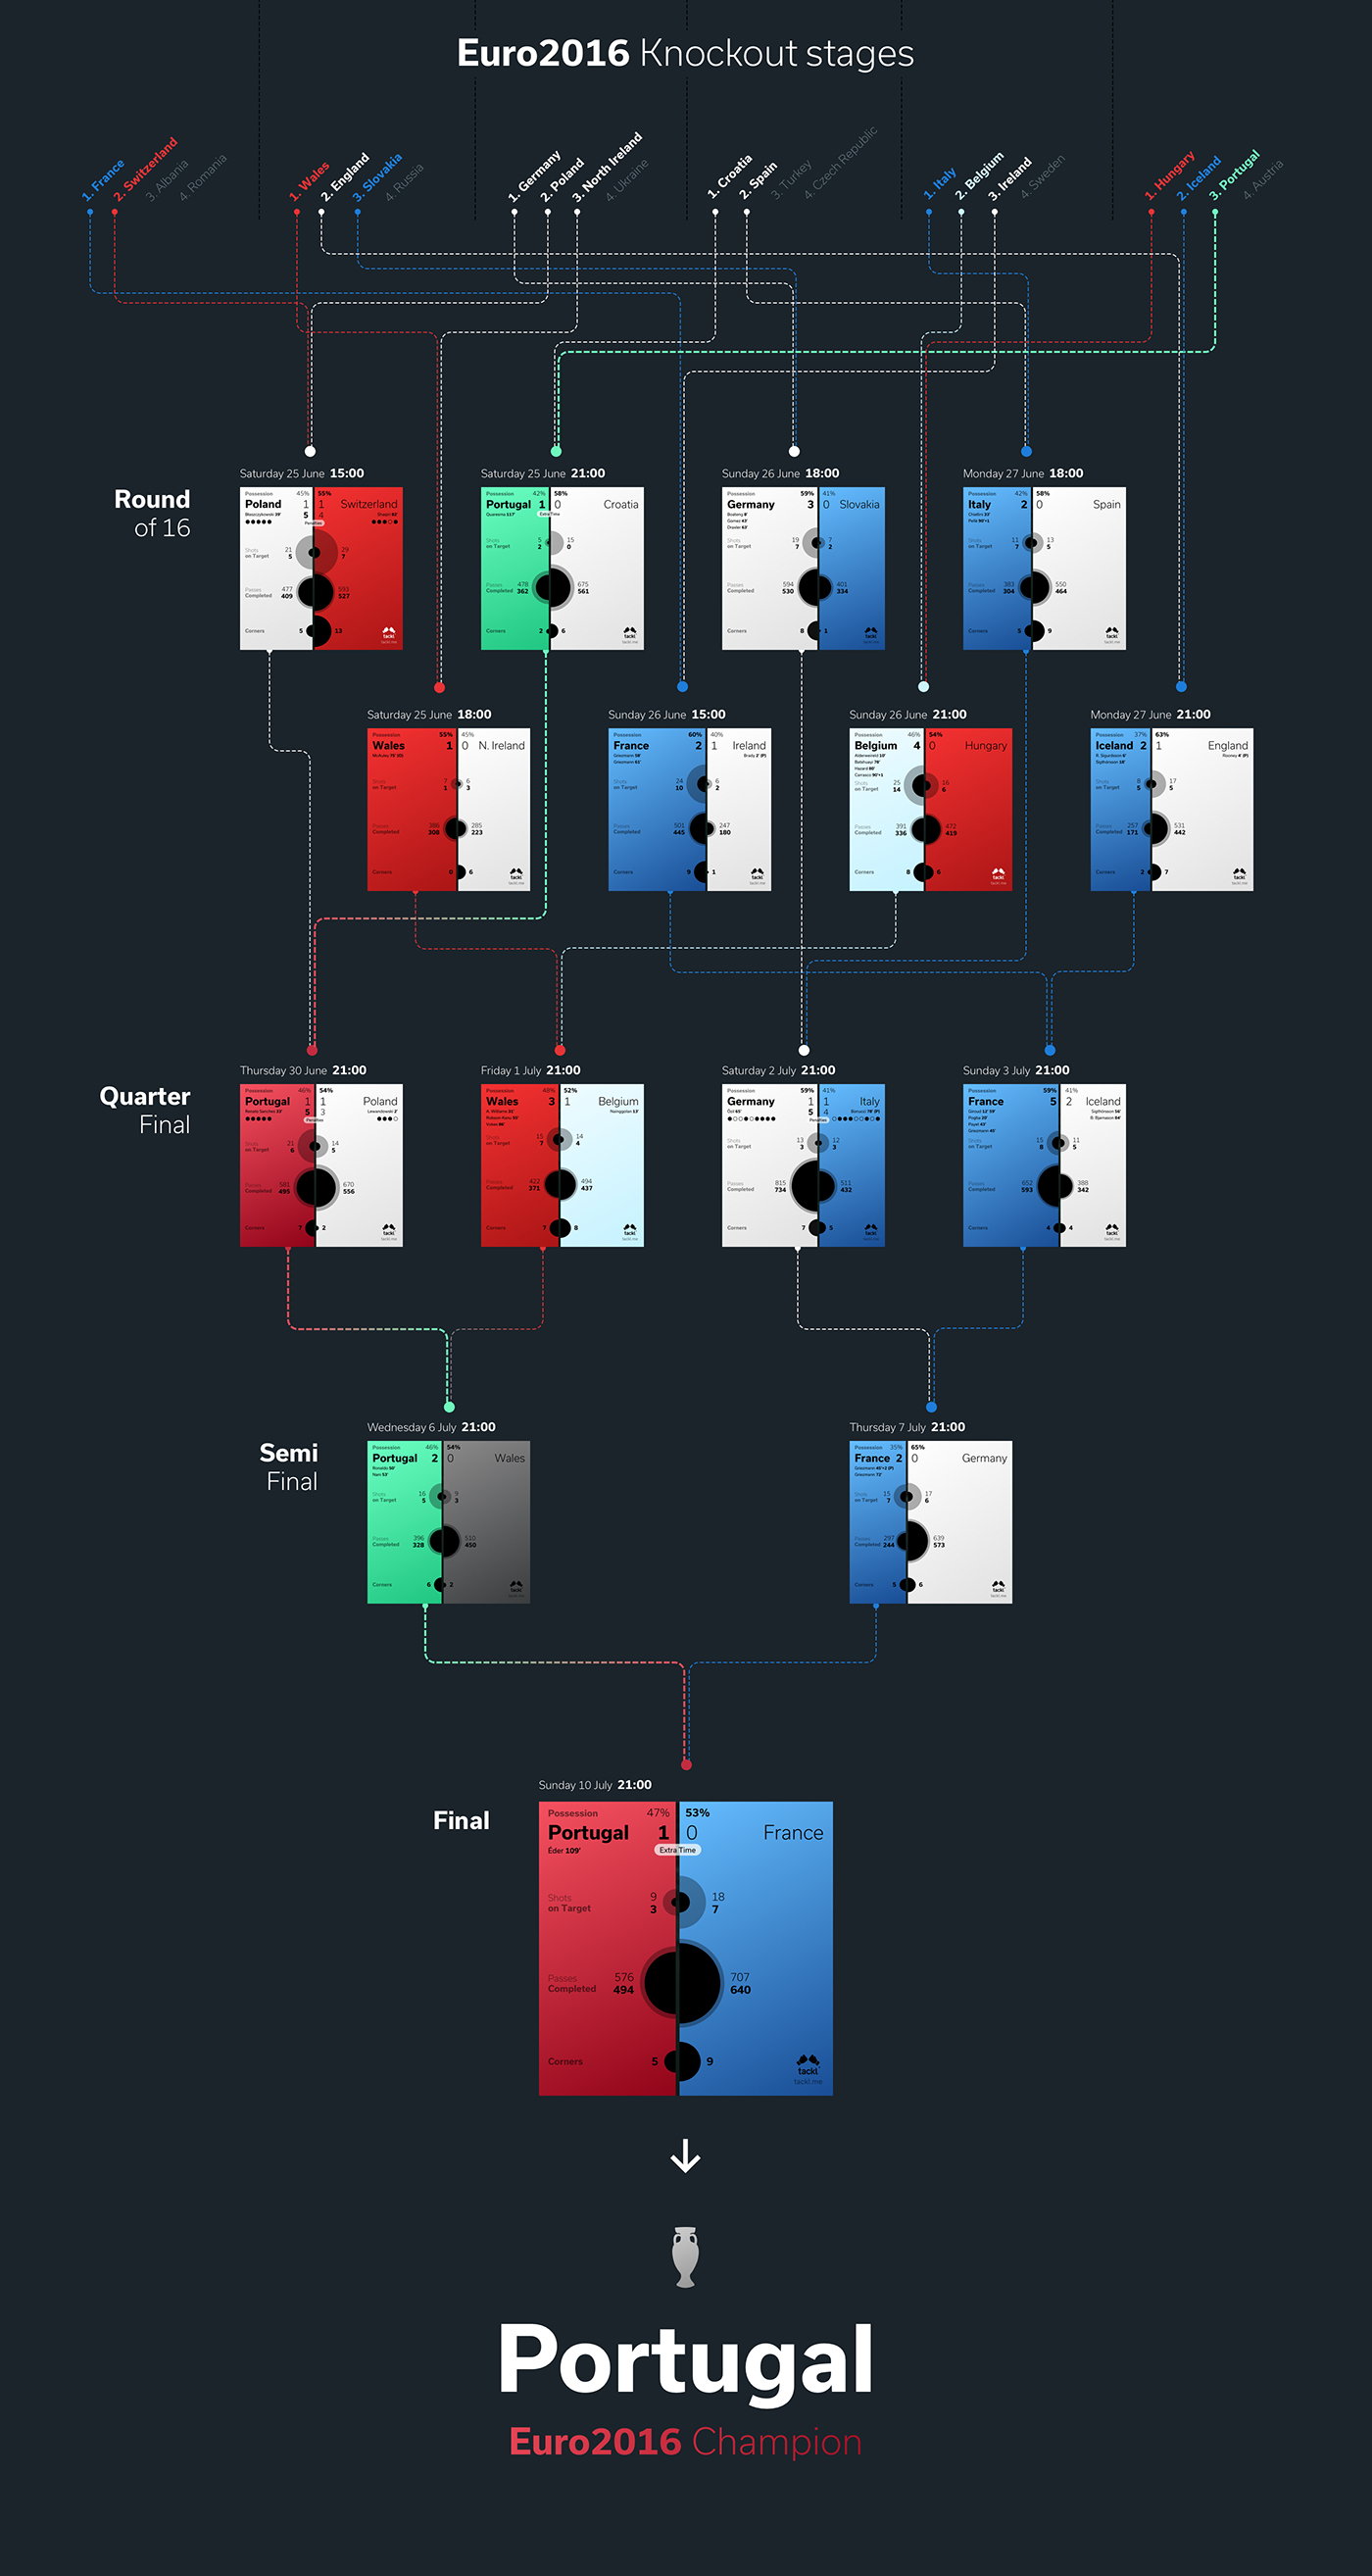 Euro2016 data visualization information design infographic infographics dataviz soccer football euro 2016 france tackl tacklstats